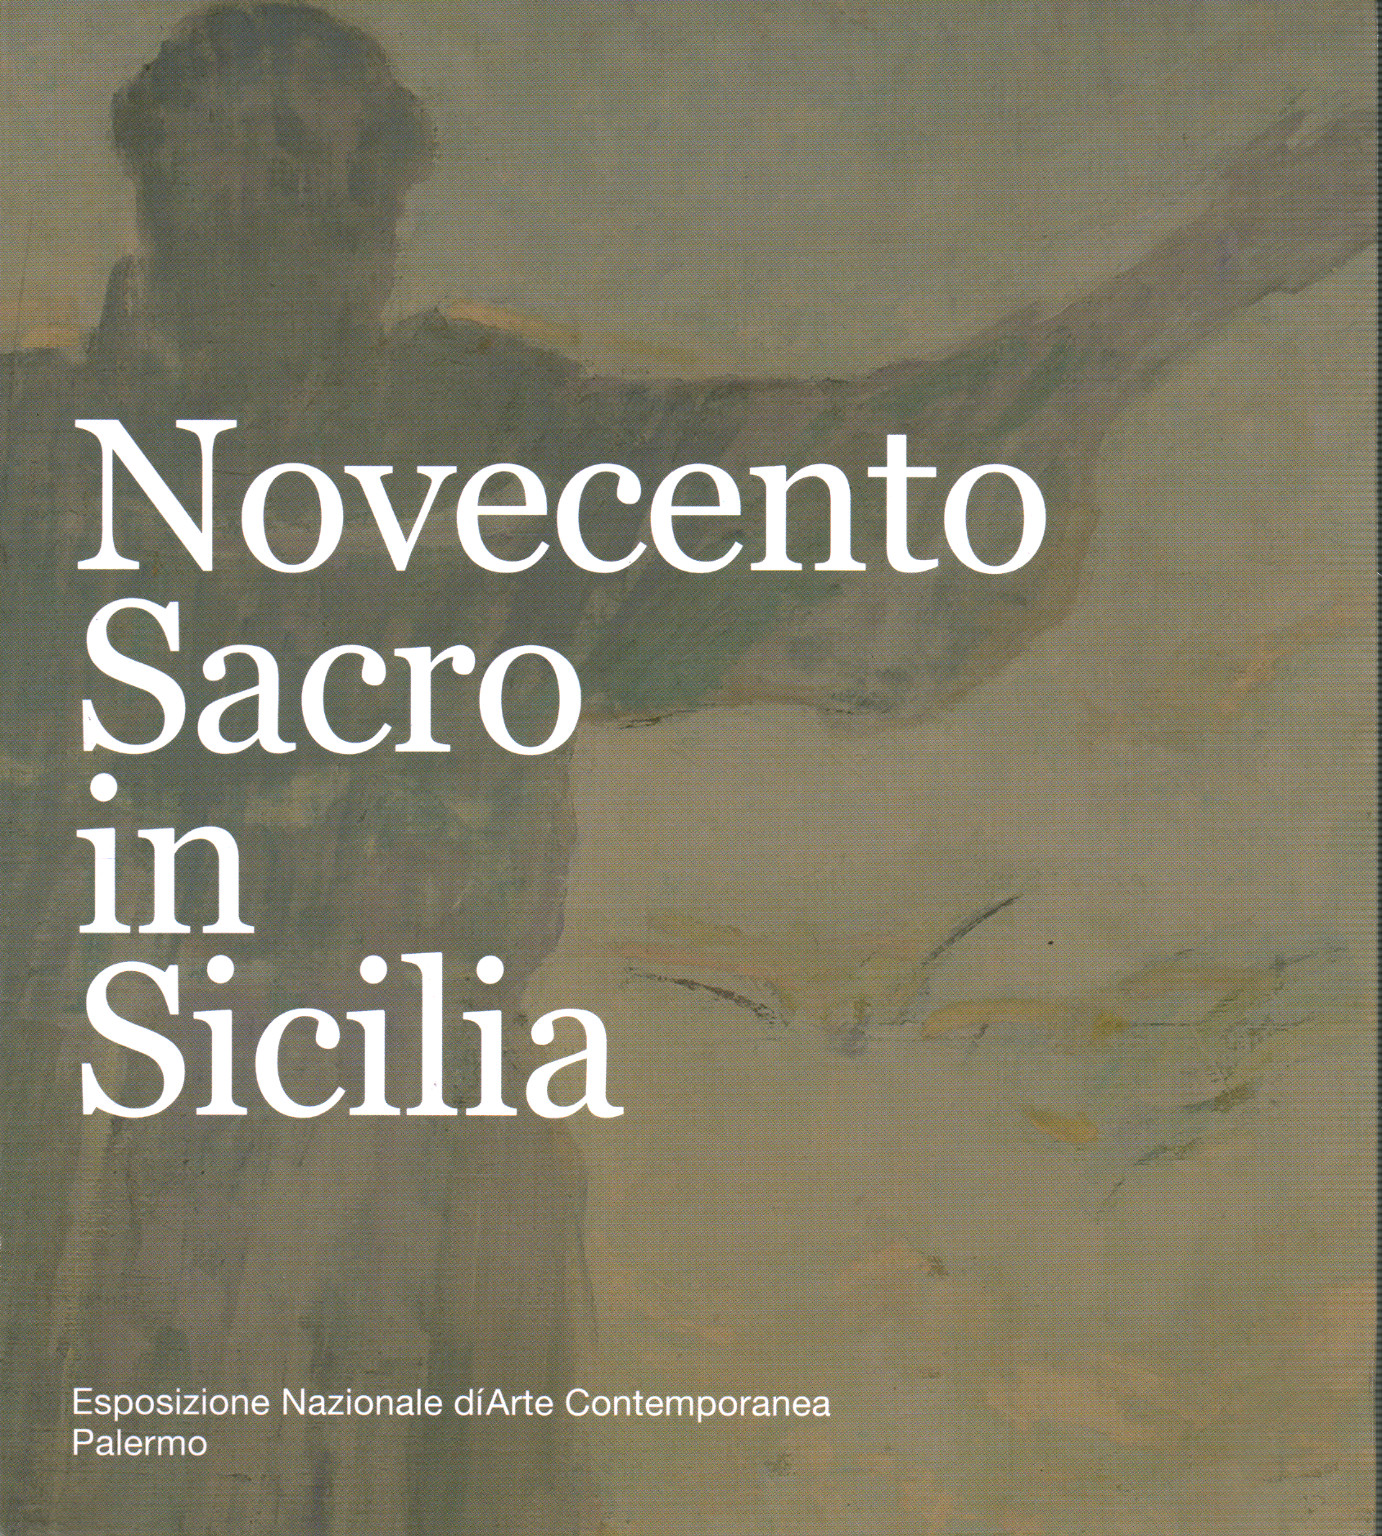 Novecento Sacro in Sicilia, s.a.